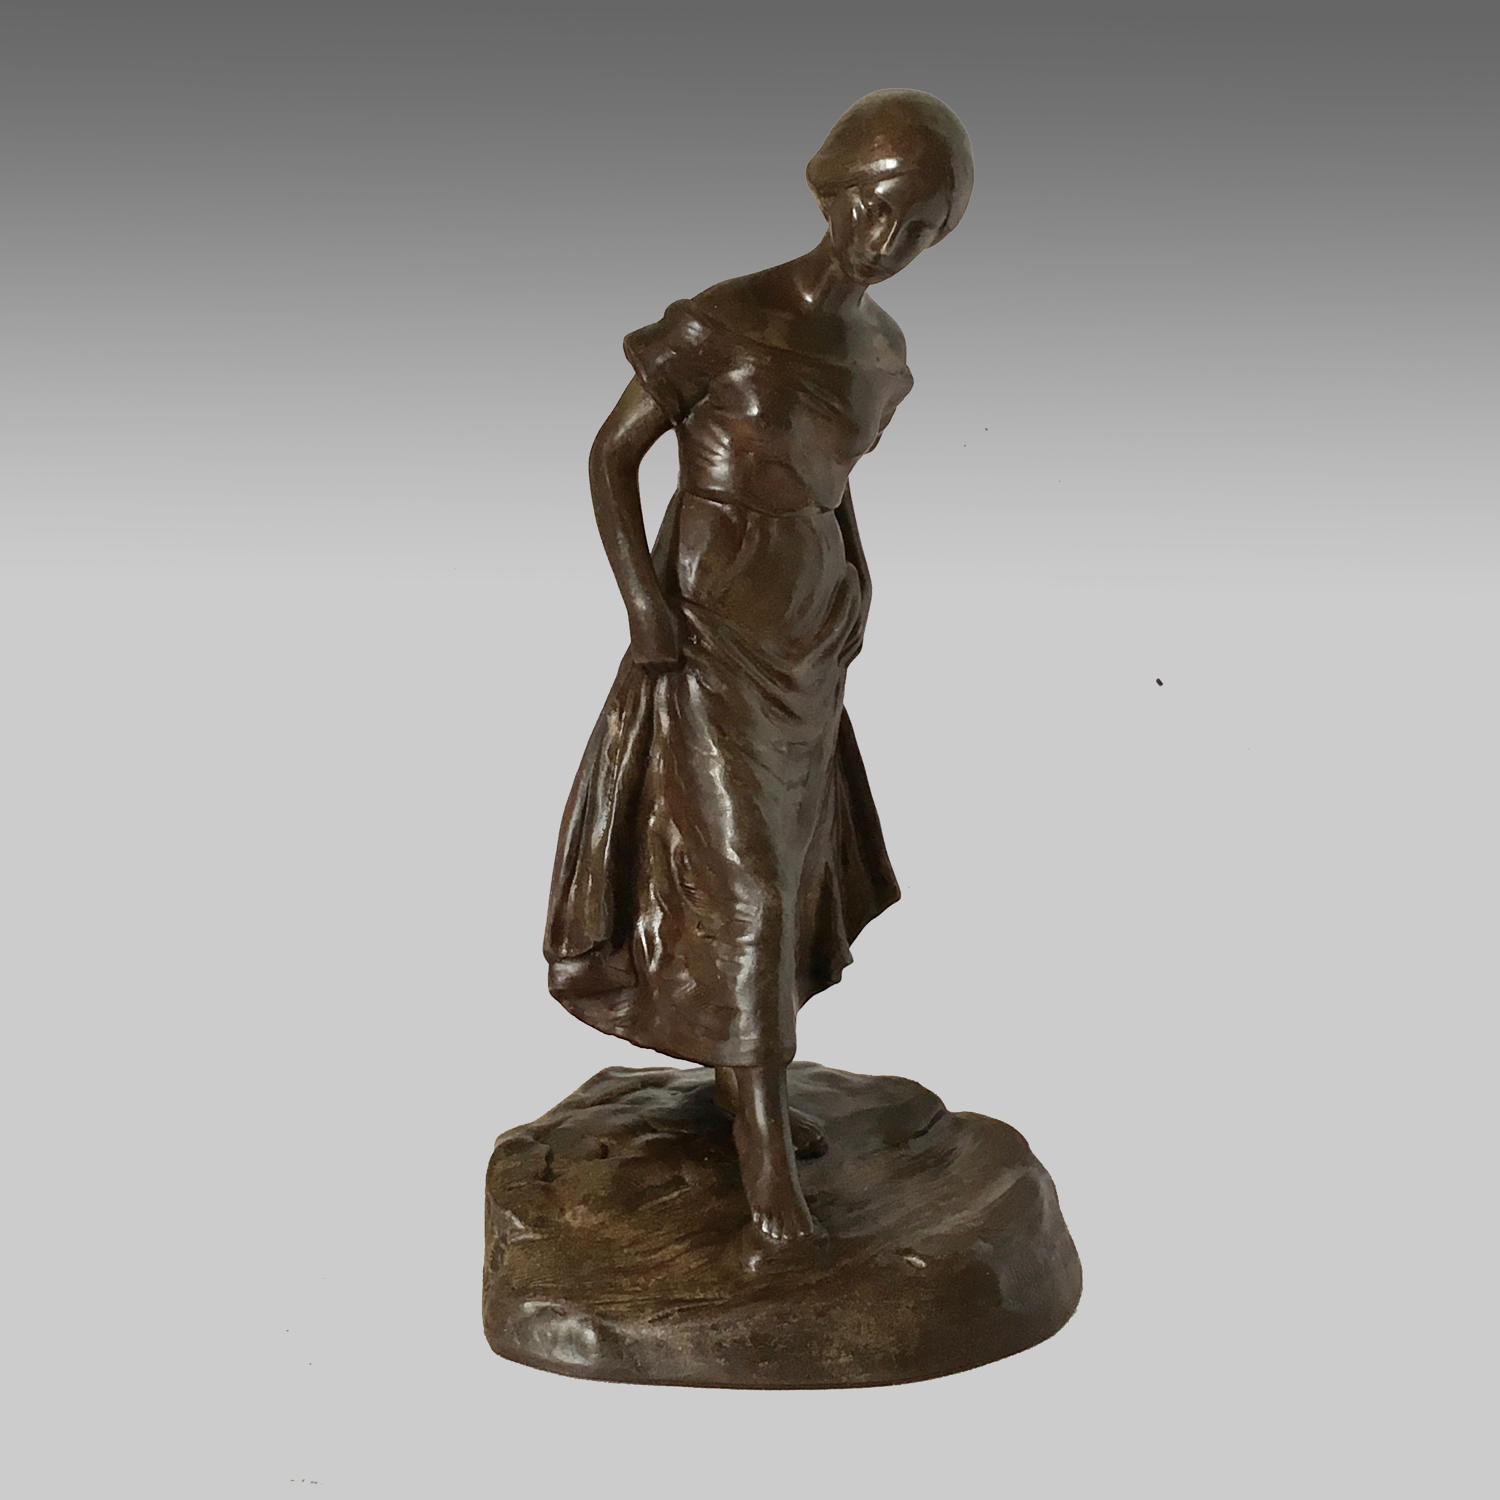 Austrian, Art Nouveau, bronze figure of girl